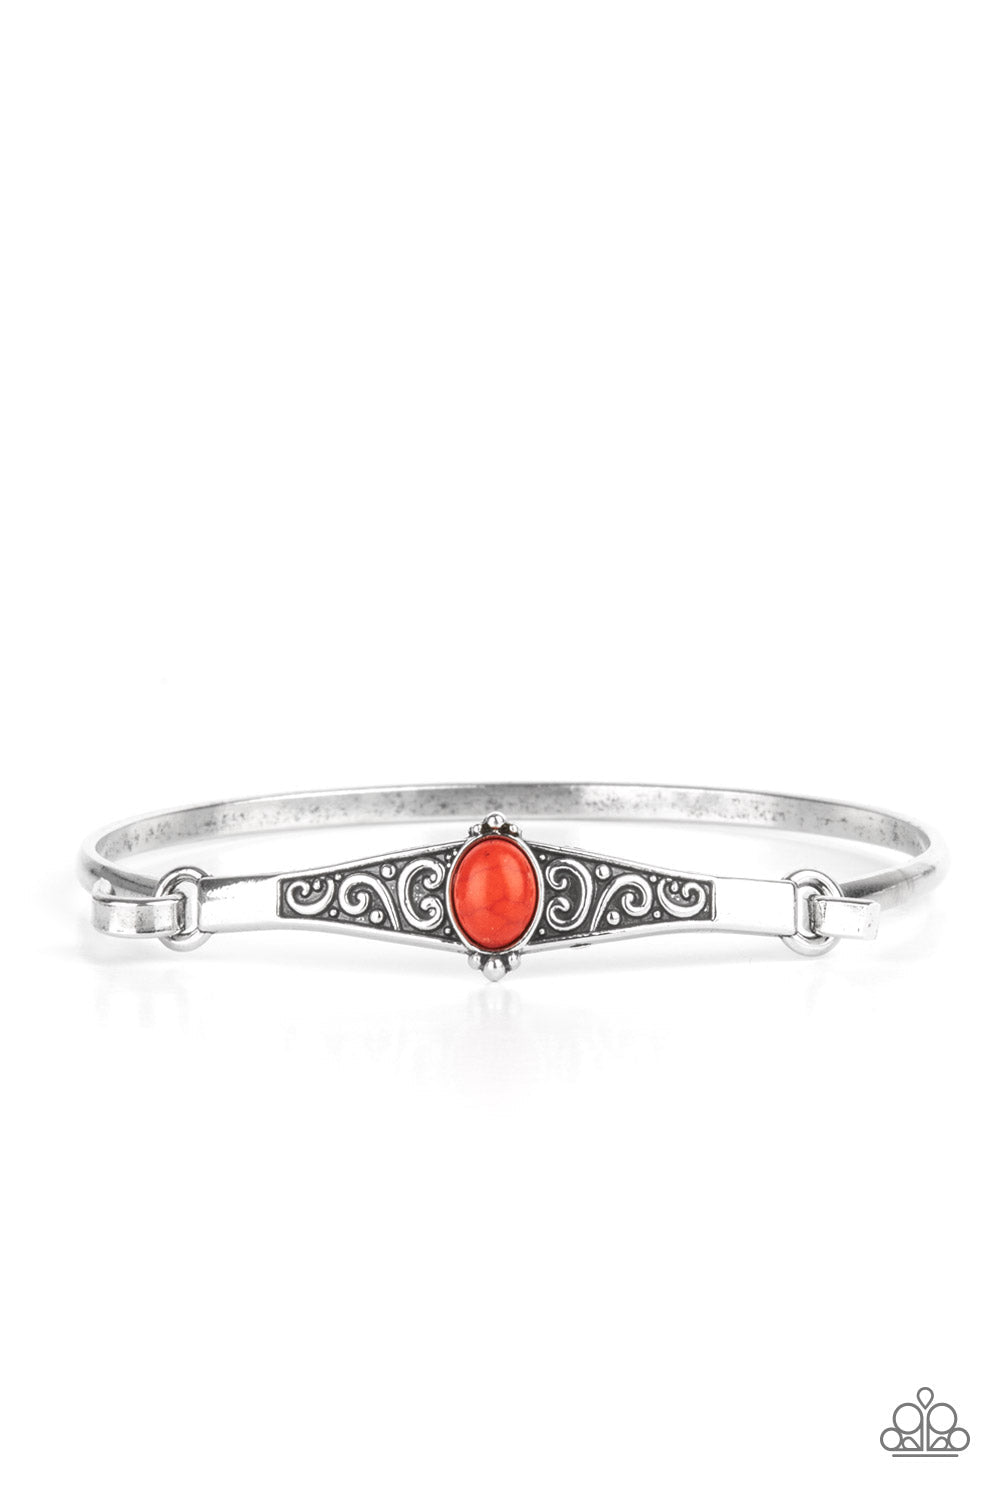 Stone Scrolls Red Stone Bangle Bracelet - Paparazzi Accessories- lightbox - CarasShop.com - $5 Jewelry by Cara Jewels